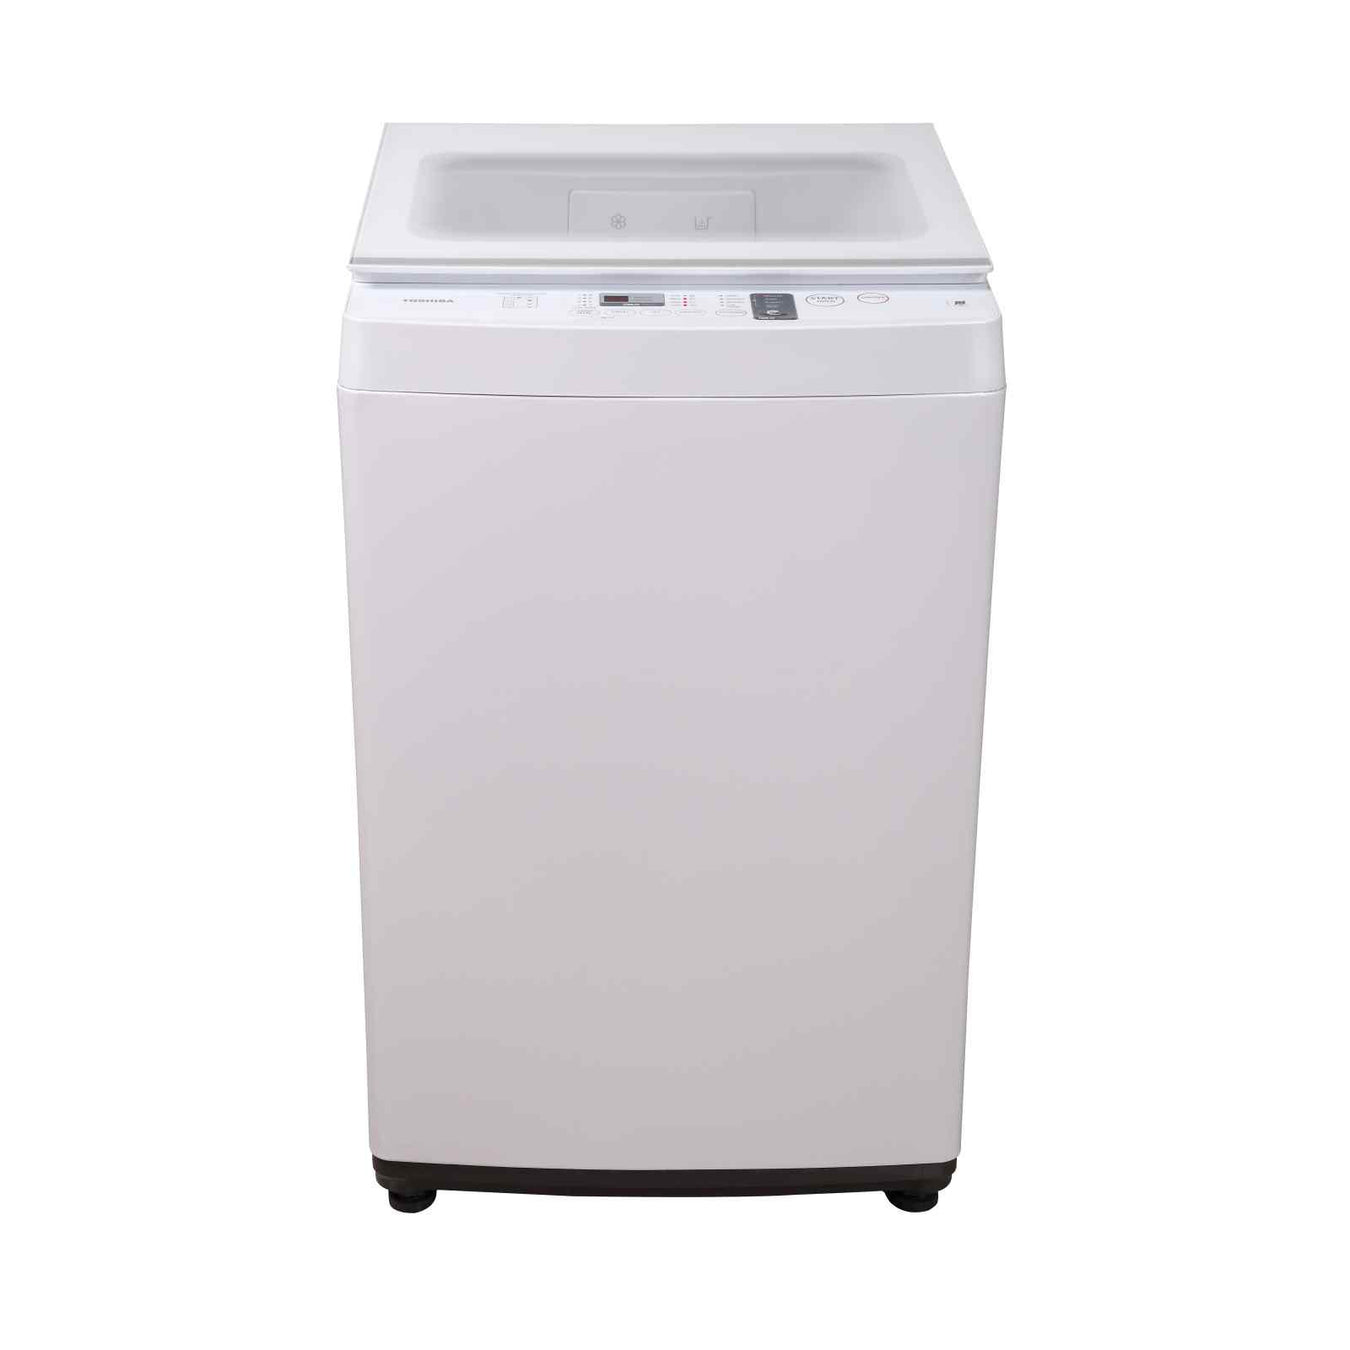 Home Appliances[Washer & Dryer]